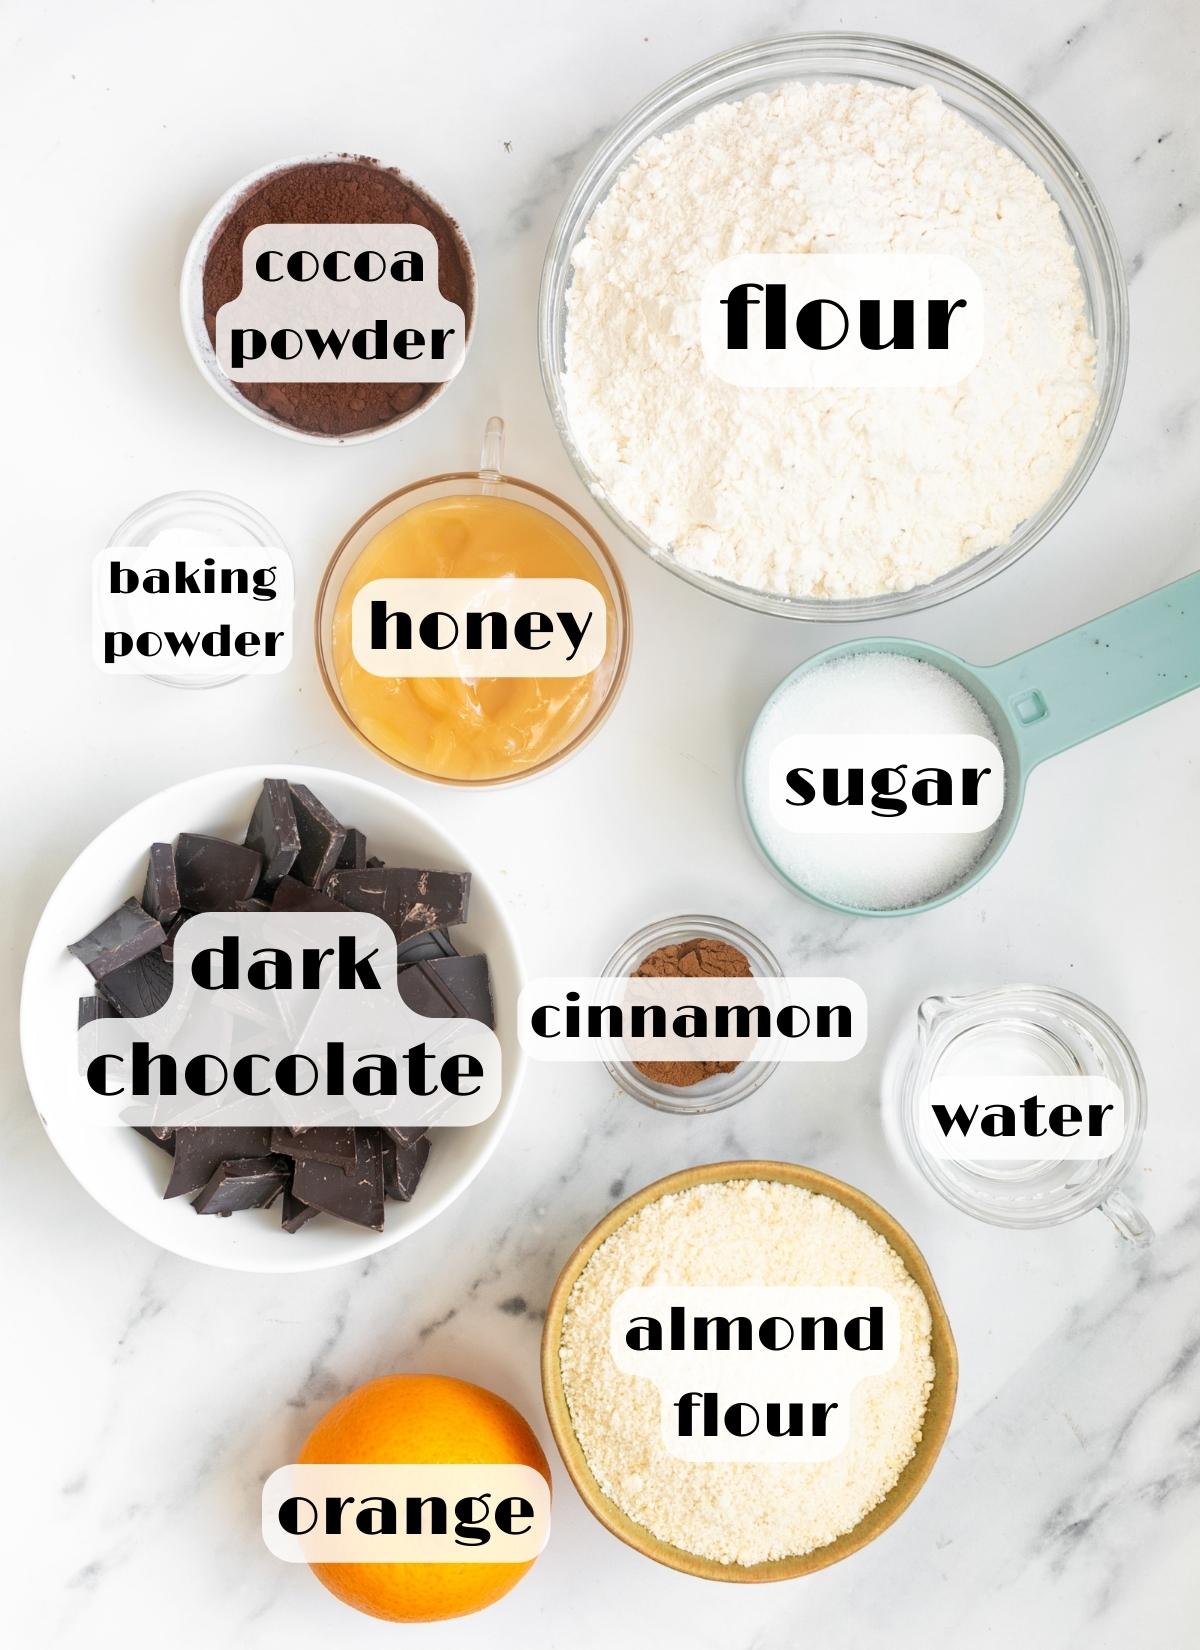 mostaccioli cookies ingredients: flour, orange, honey, sugar, cocoa, chocolate, almond flour, water, baking powder.